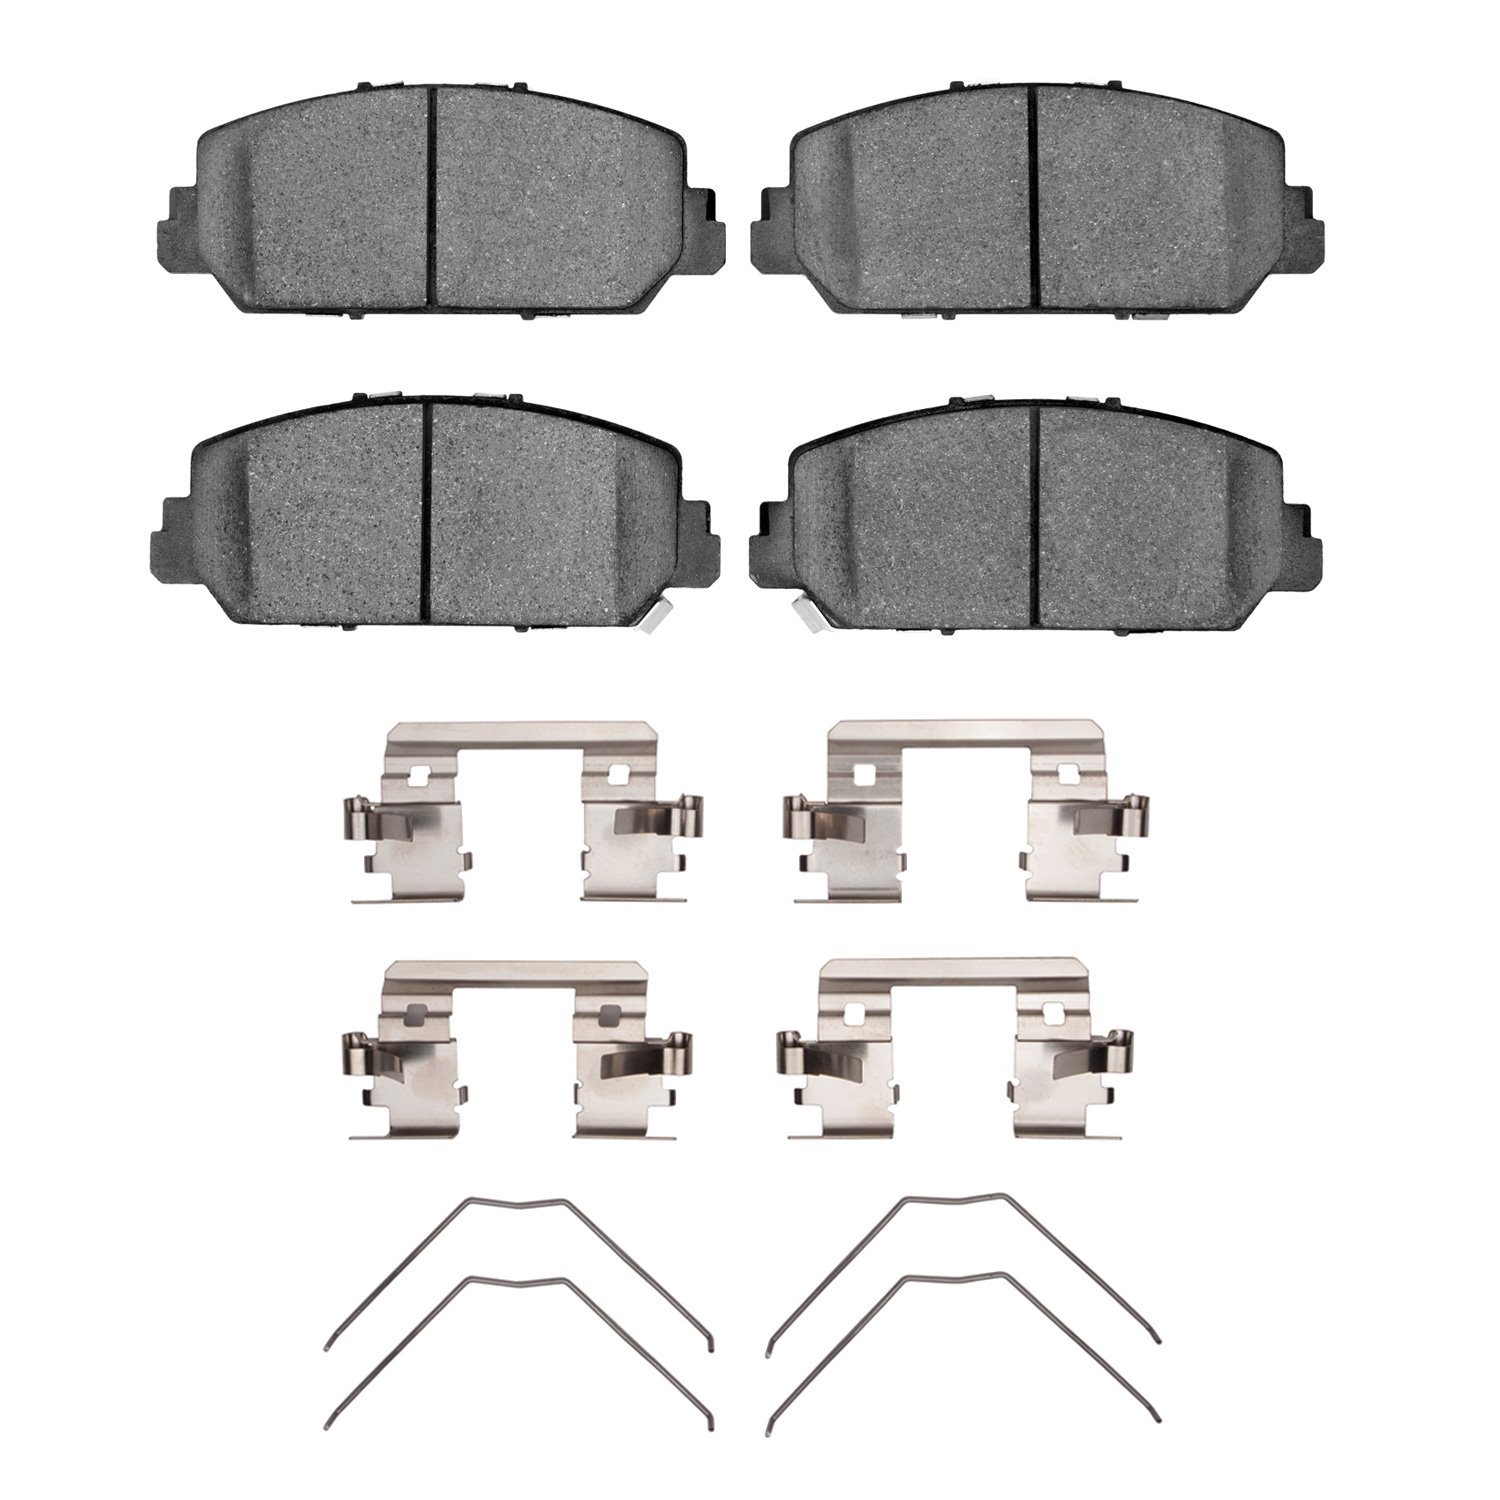 1551-1697-01 5000 Advanced Ceramic Brake Pads & Hardware Kit, Fits Select Acura/Honda, Position: Front